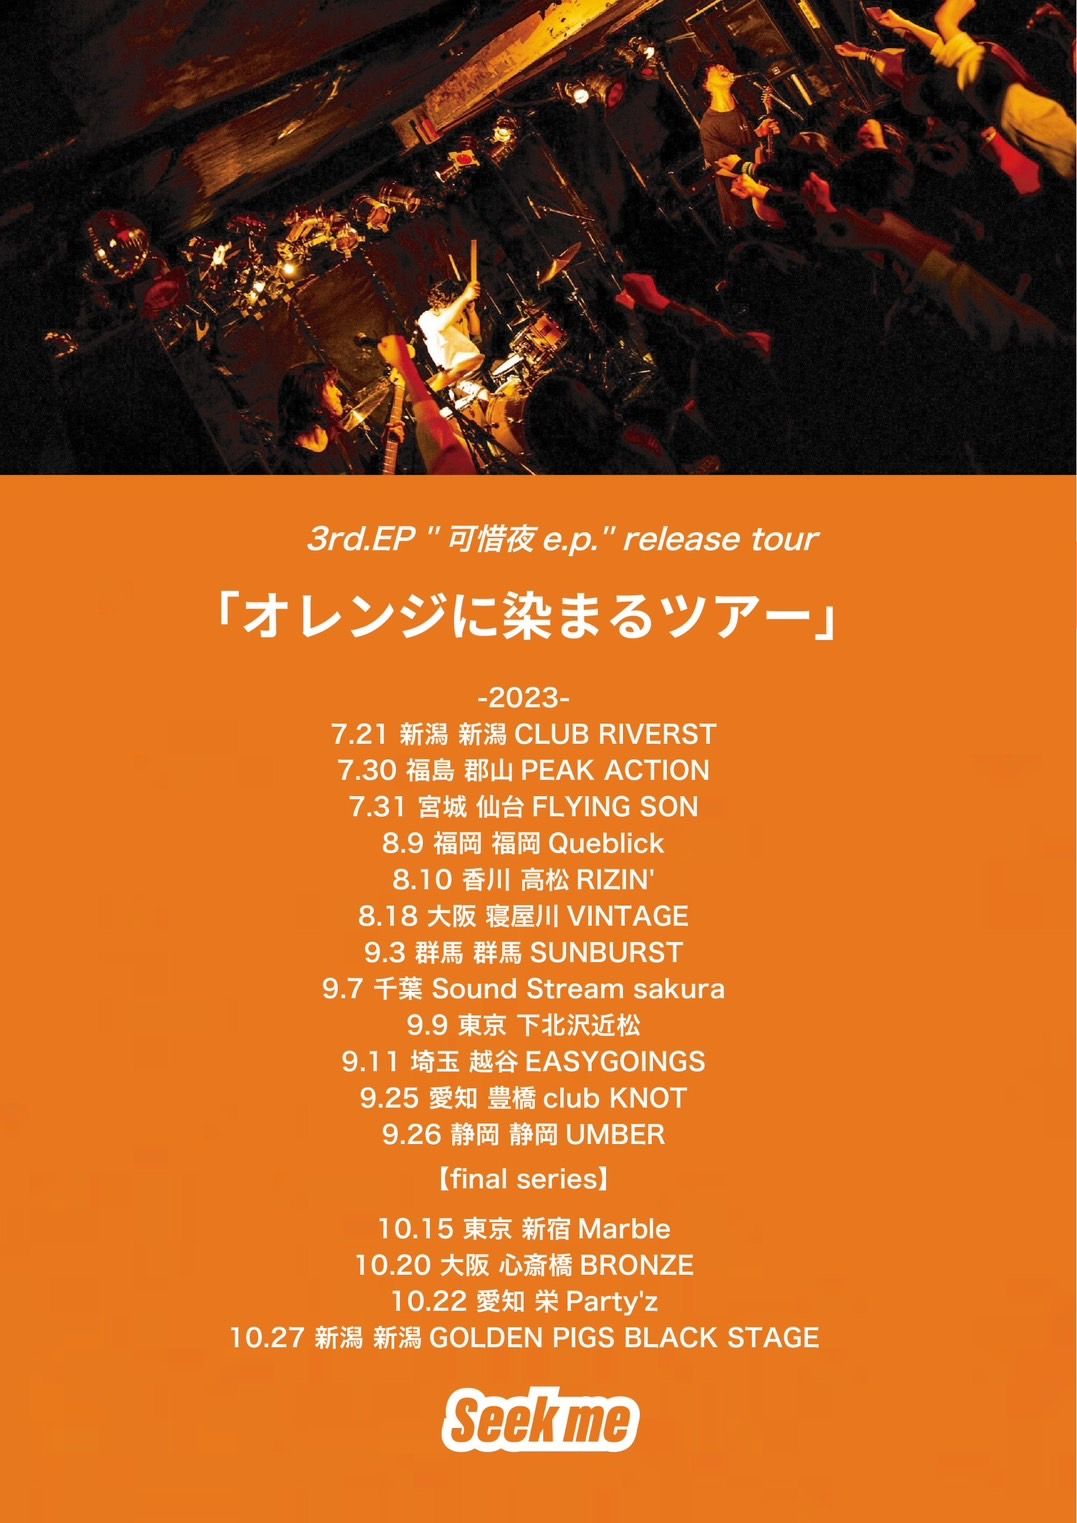 Seek me 3rd.EP"可惜夜 e.p."release tour「オレンジに染まるツアー」【final series 東京】